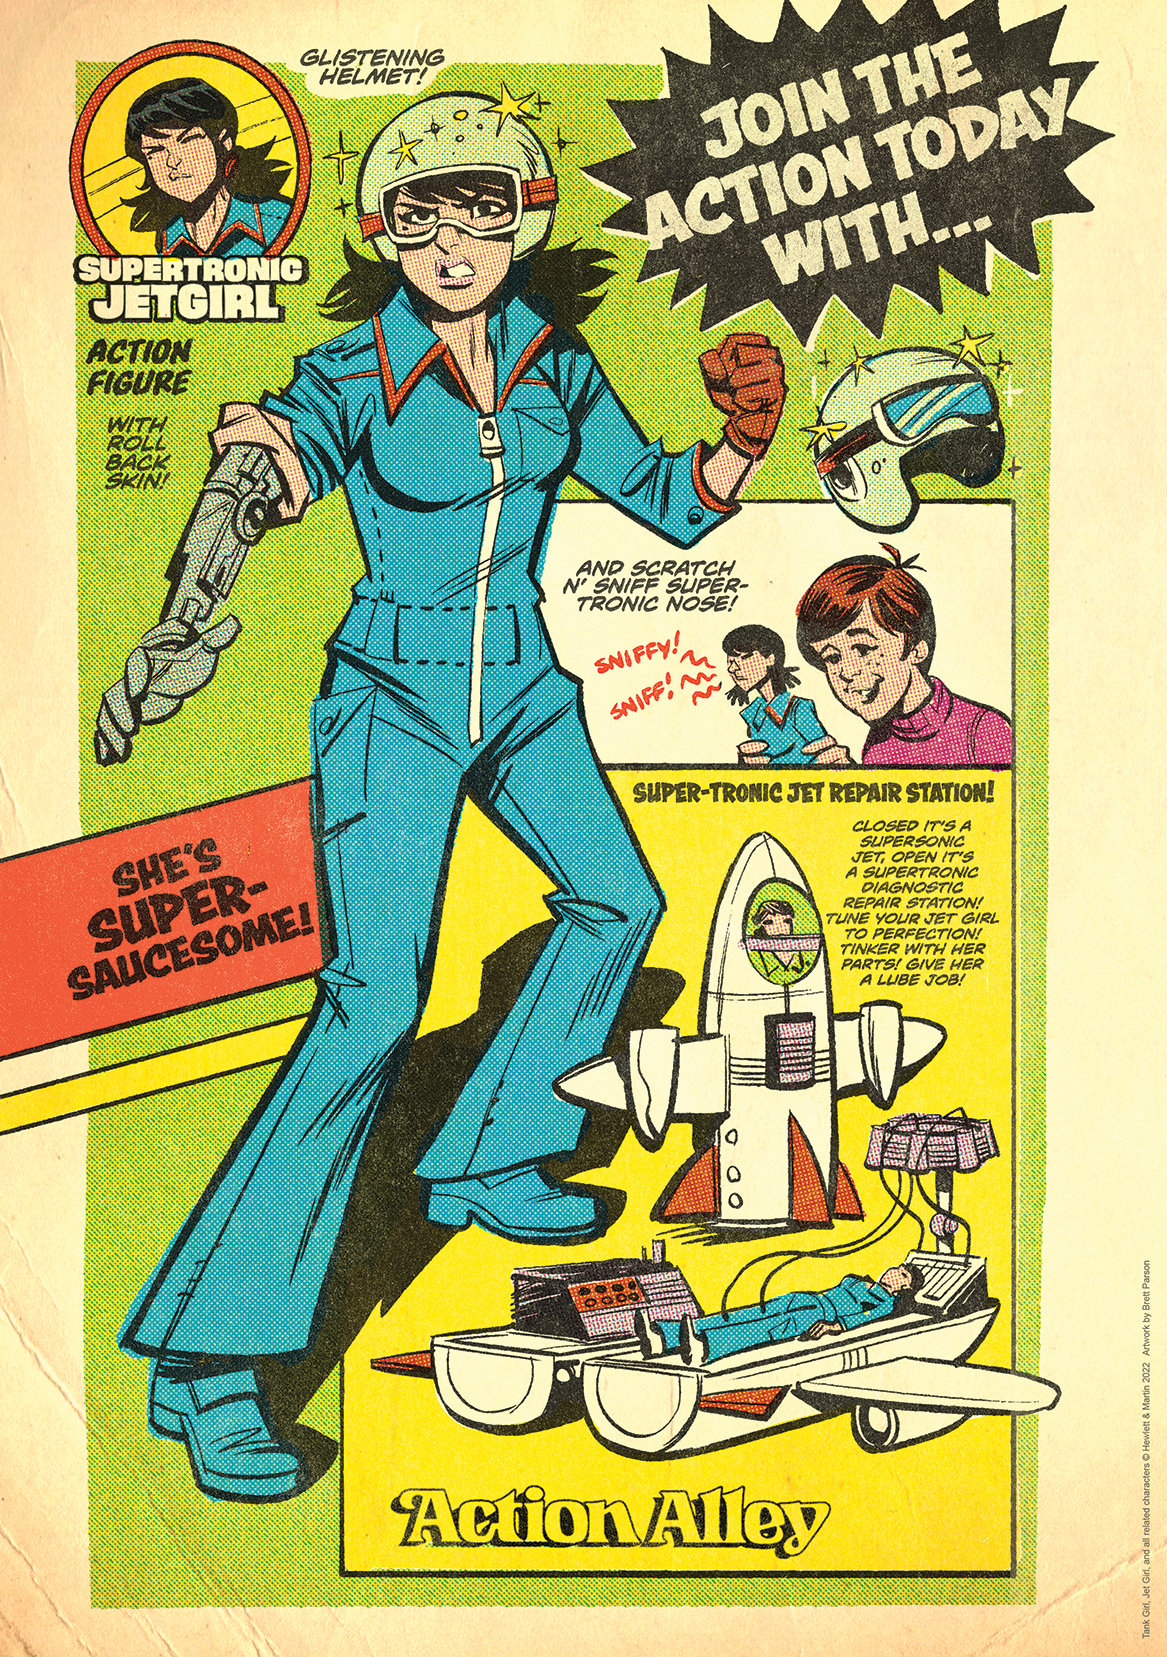 Image of TANK GIRL POSTER MAGAZINE #17 - with bonus SUPERTONIC JET GIRL poster and badge!